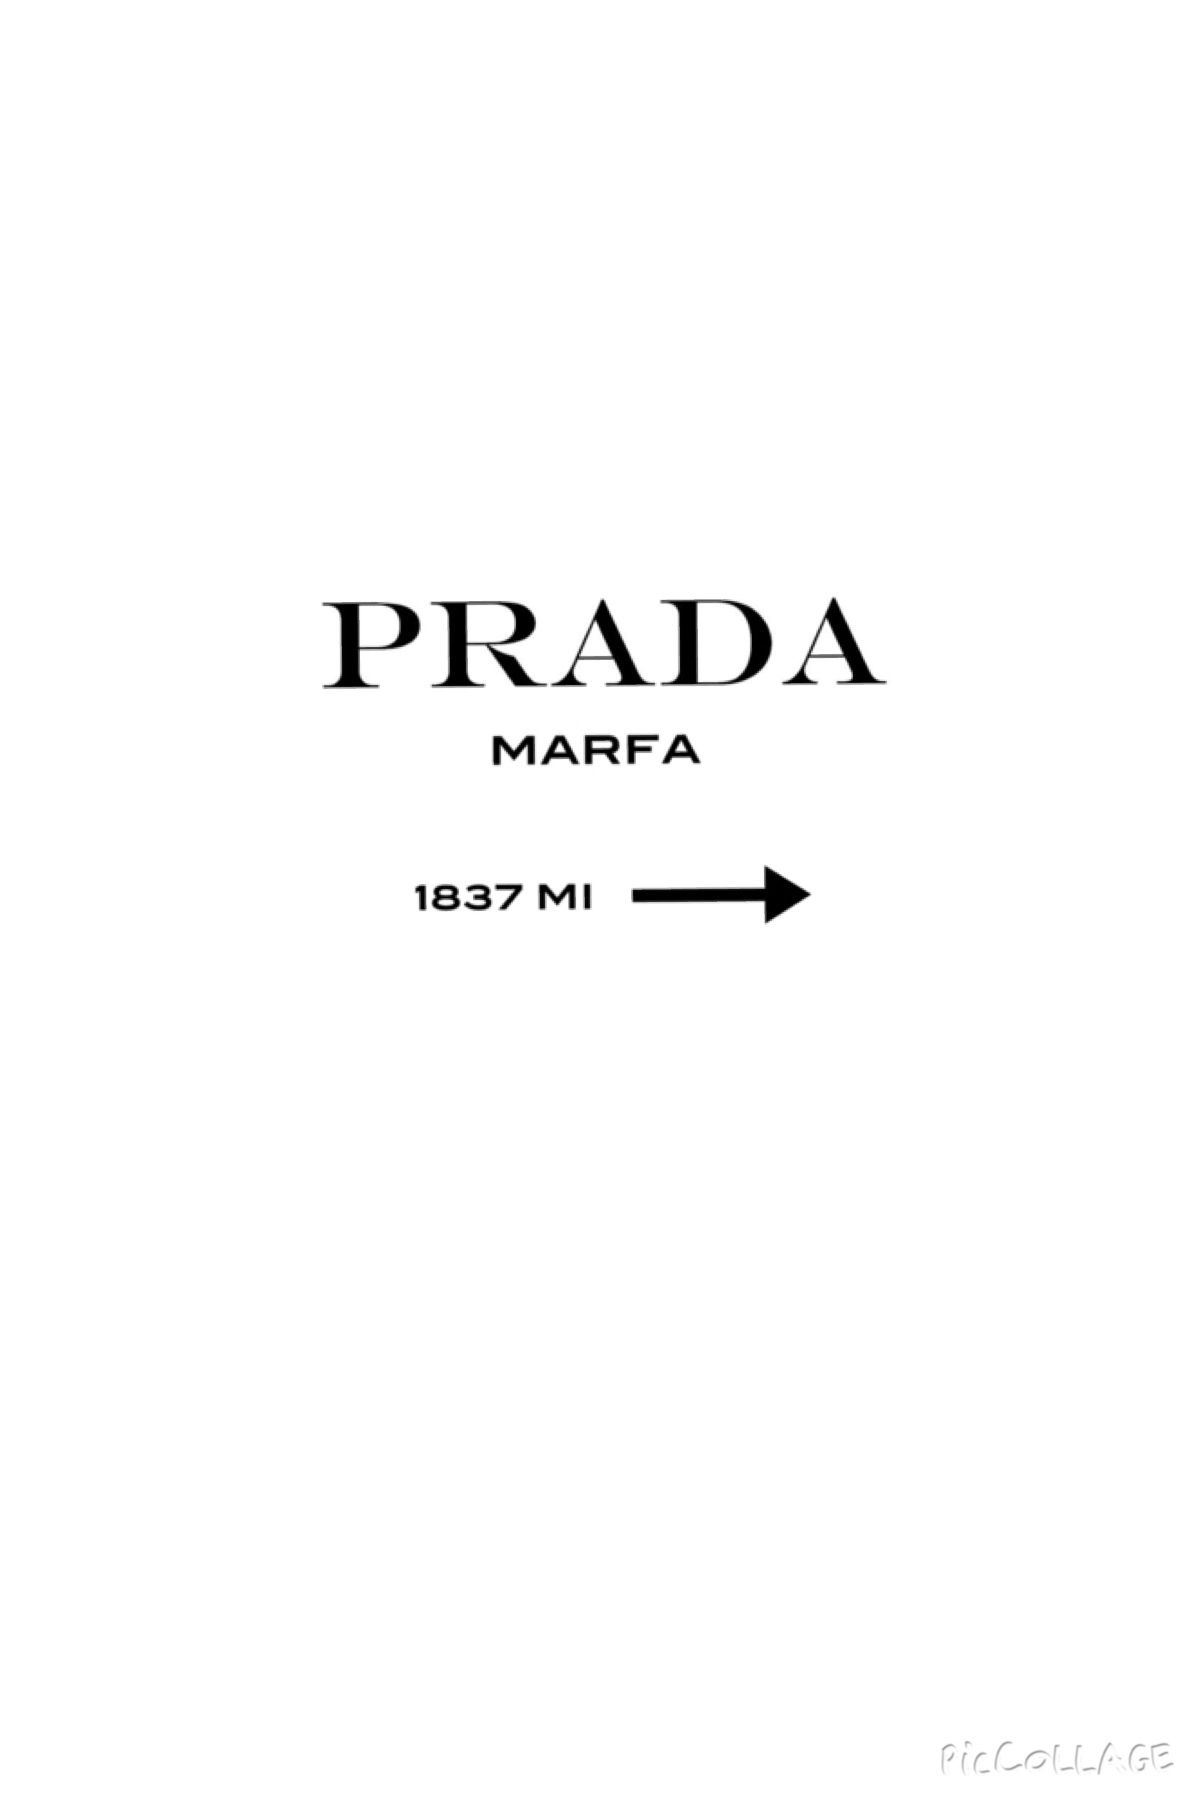 Prada Marfa Wallpapers